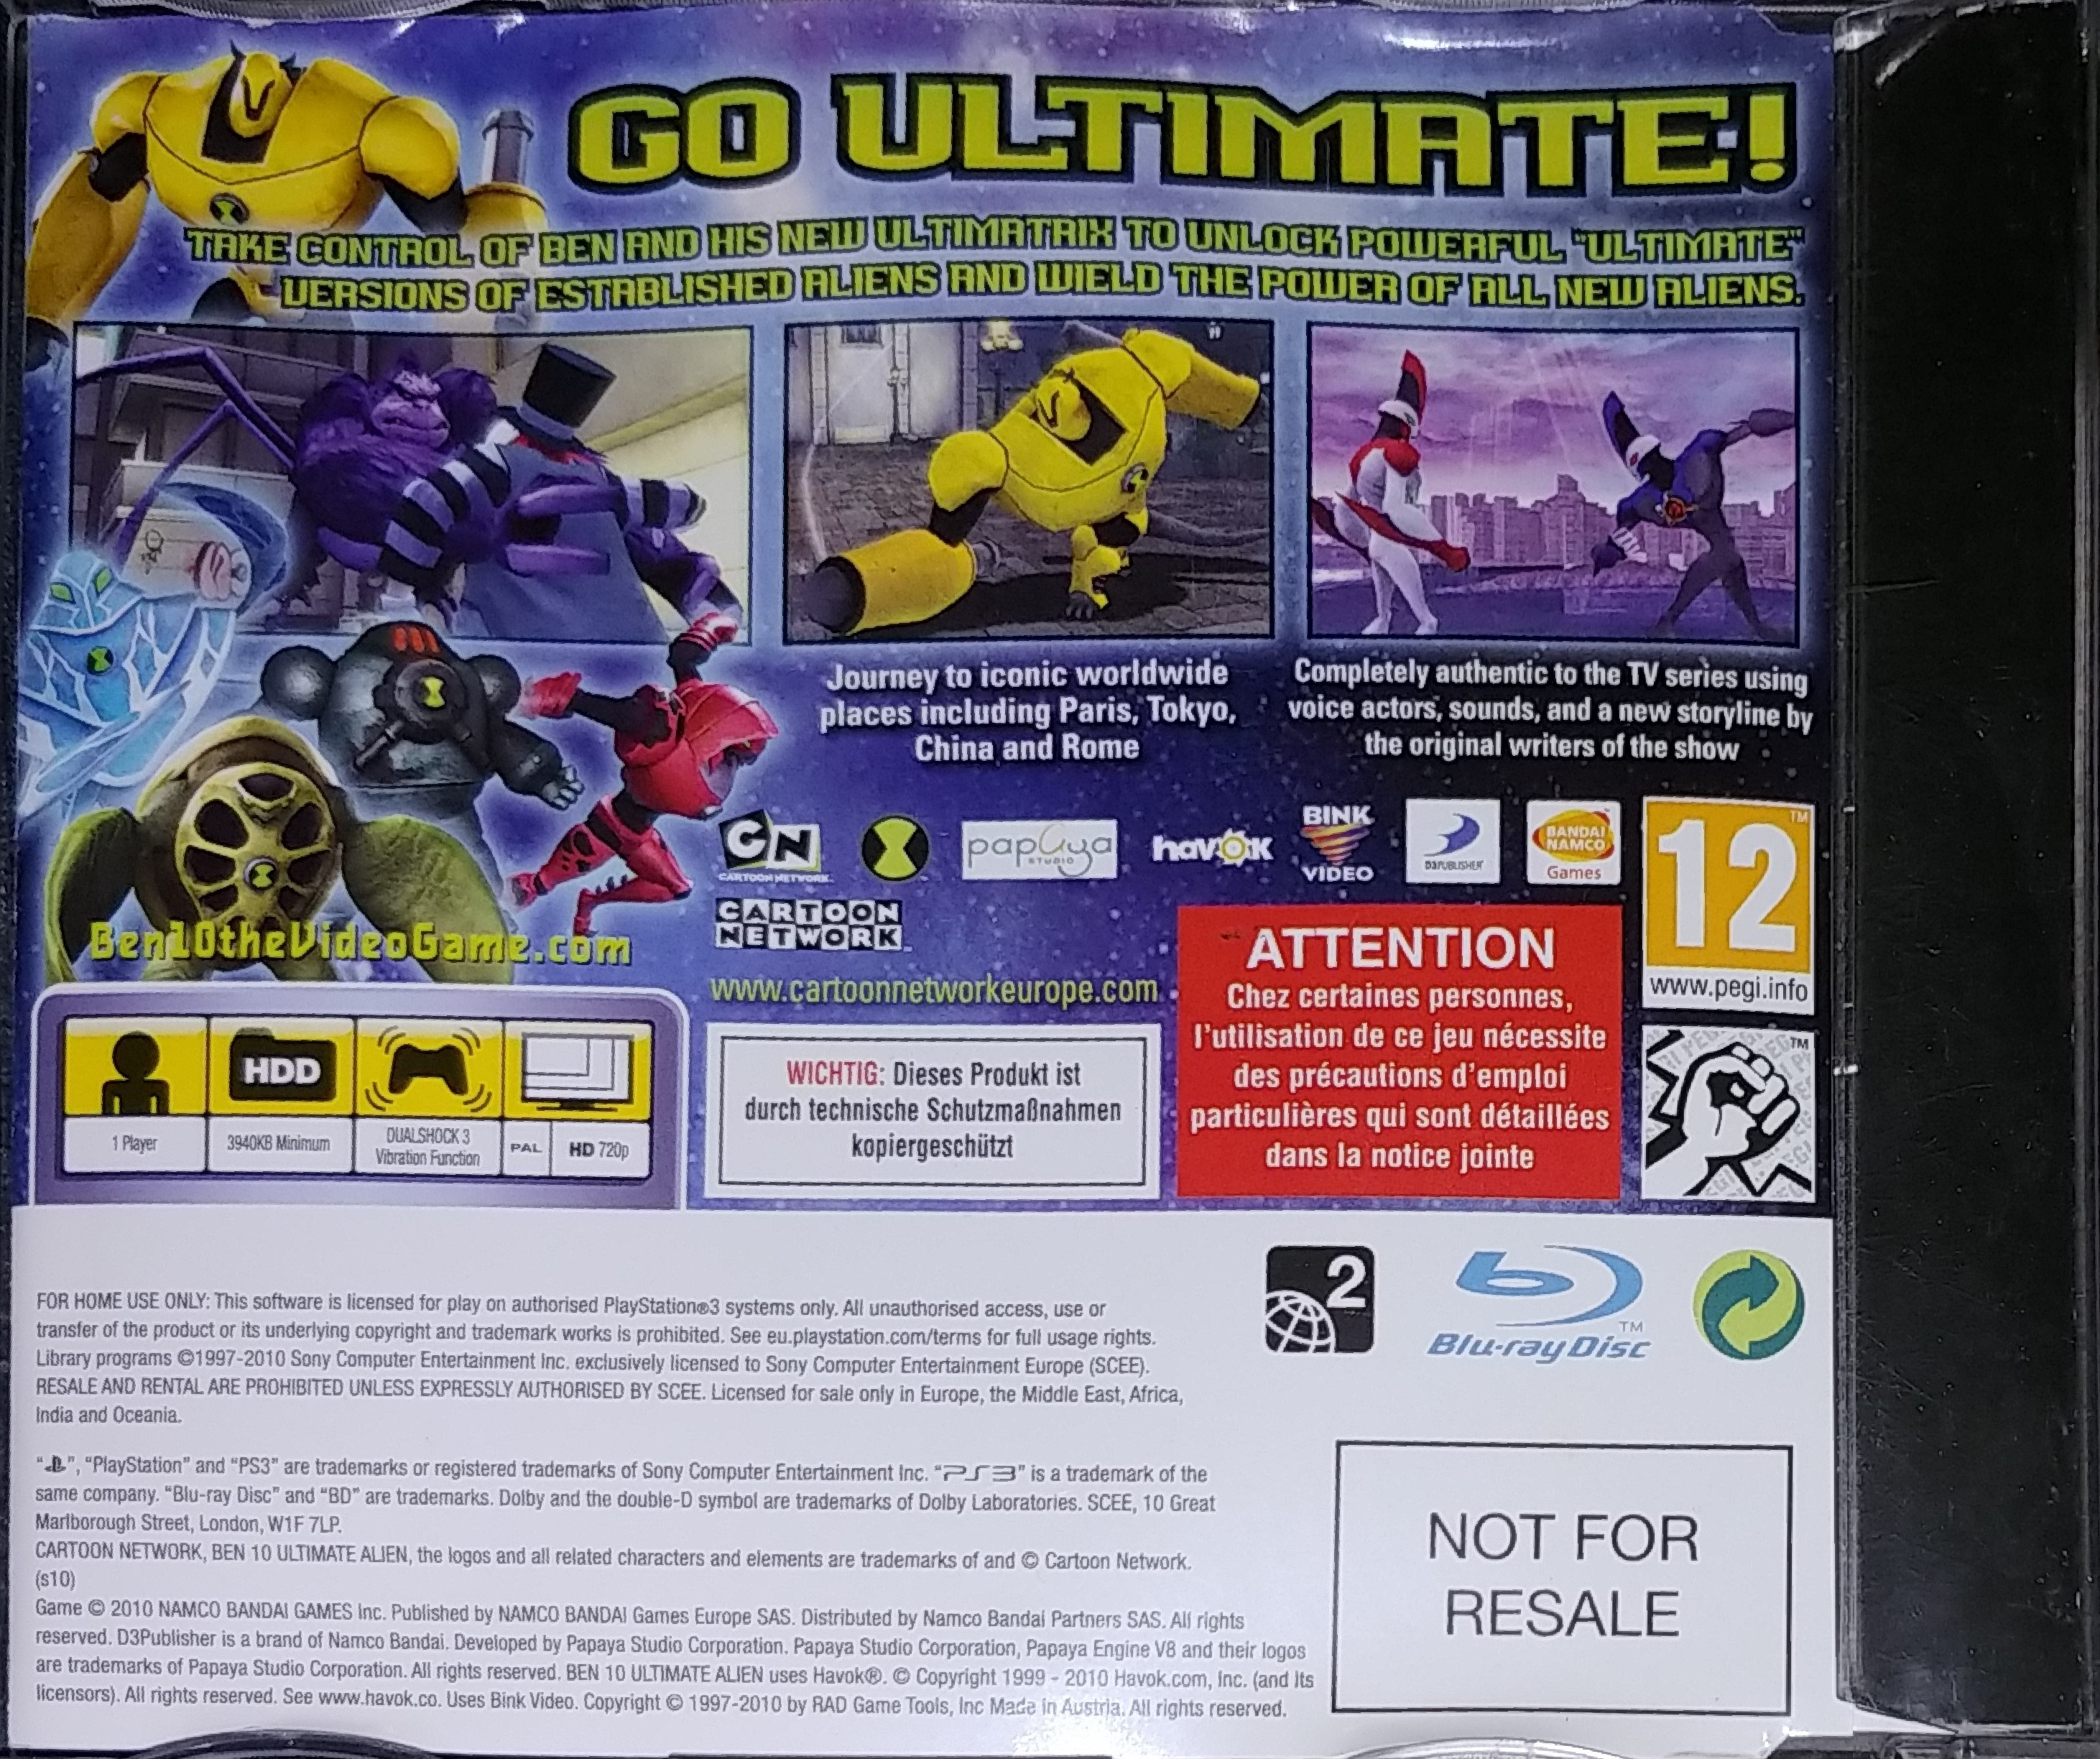  Ben 10 Ultimate Alien: Cosmic Destruction (PS3) by Namco Bandai  : Video Games